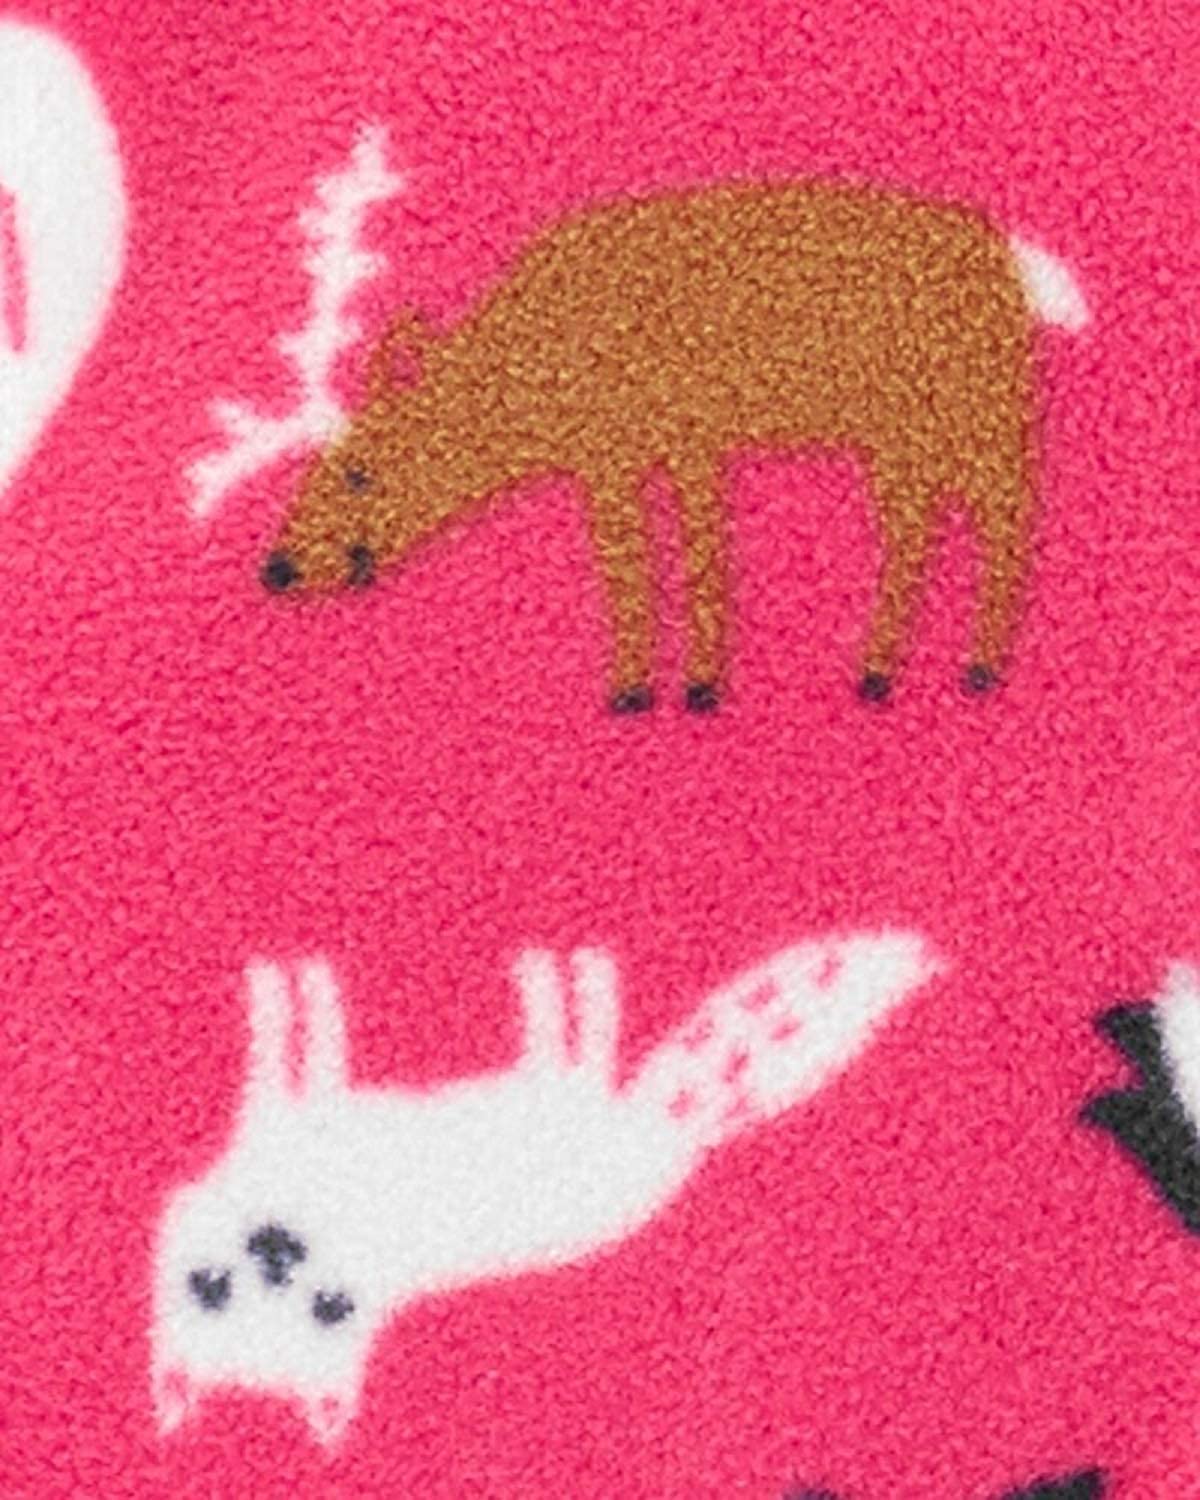 allbrand365 Designer Infant Girls Footed Fleece Animal print Coverall